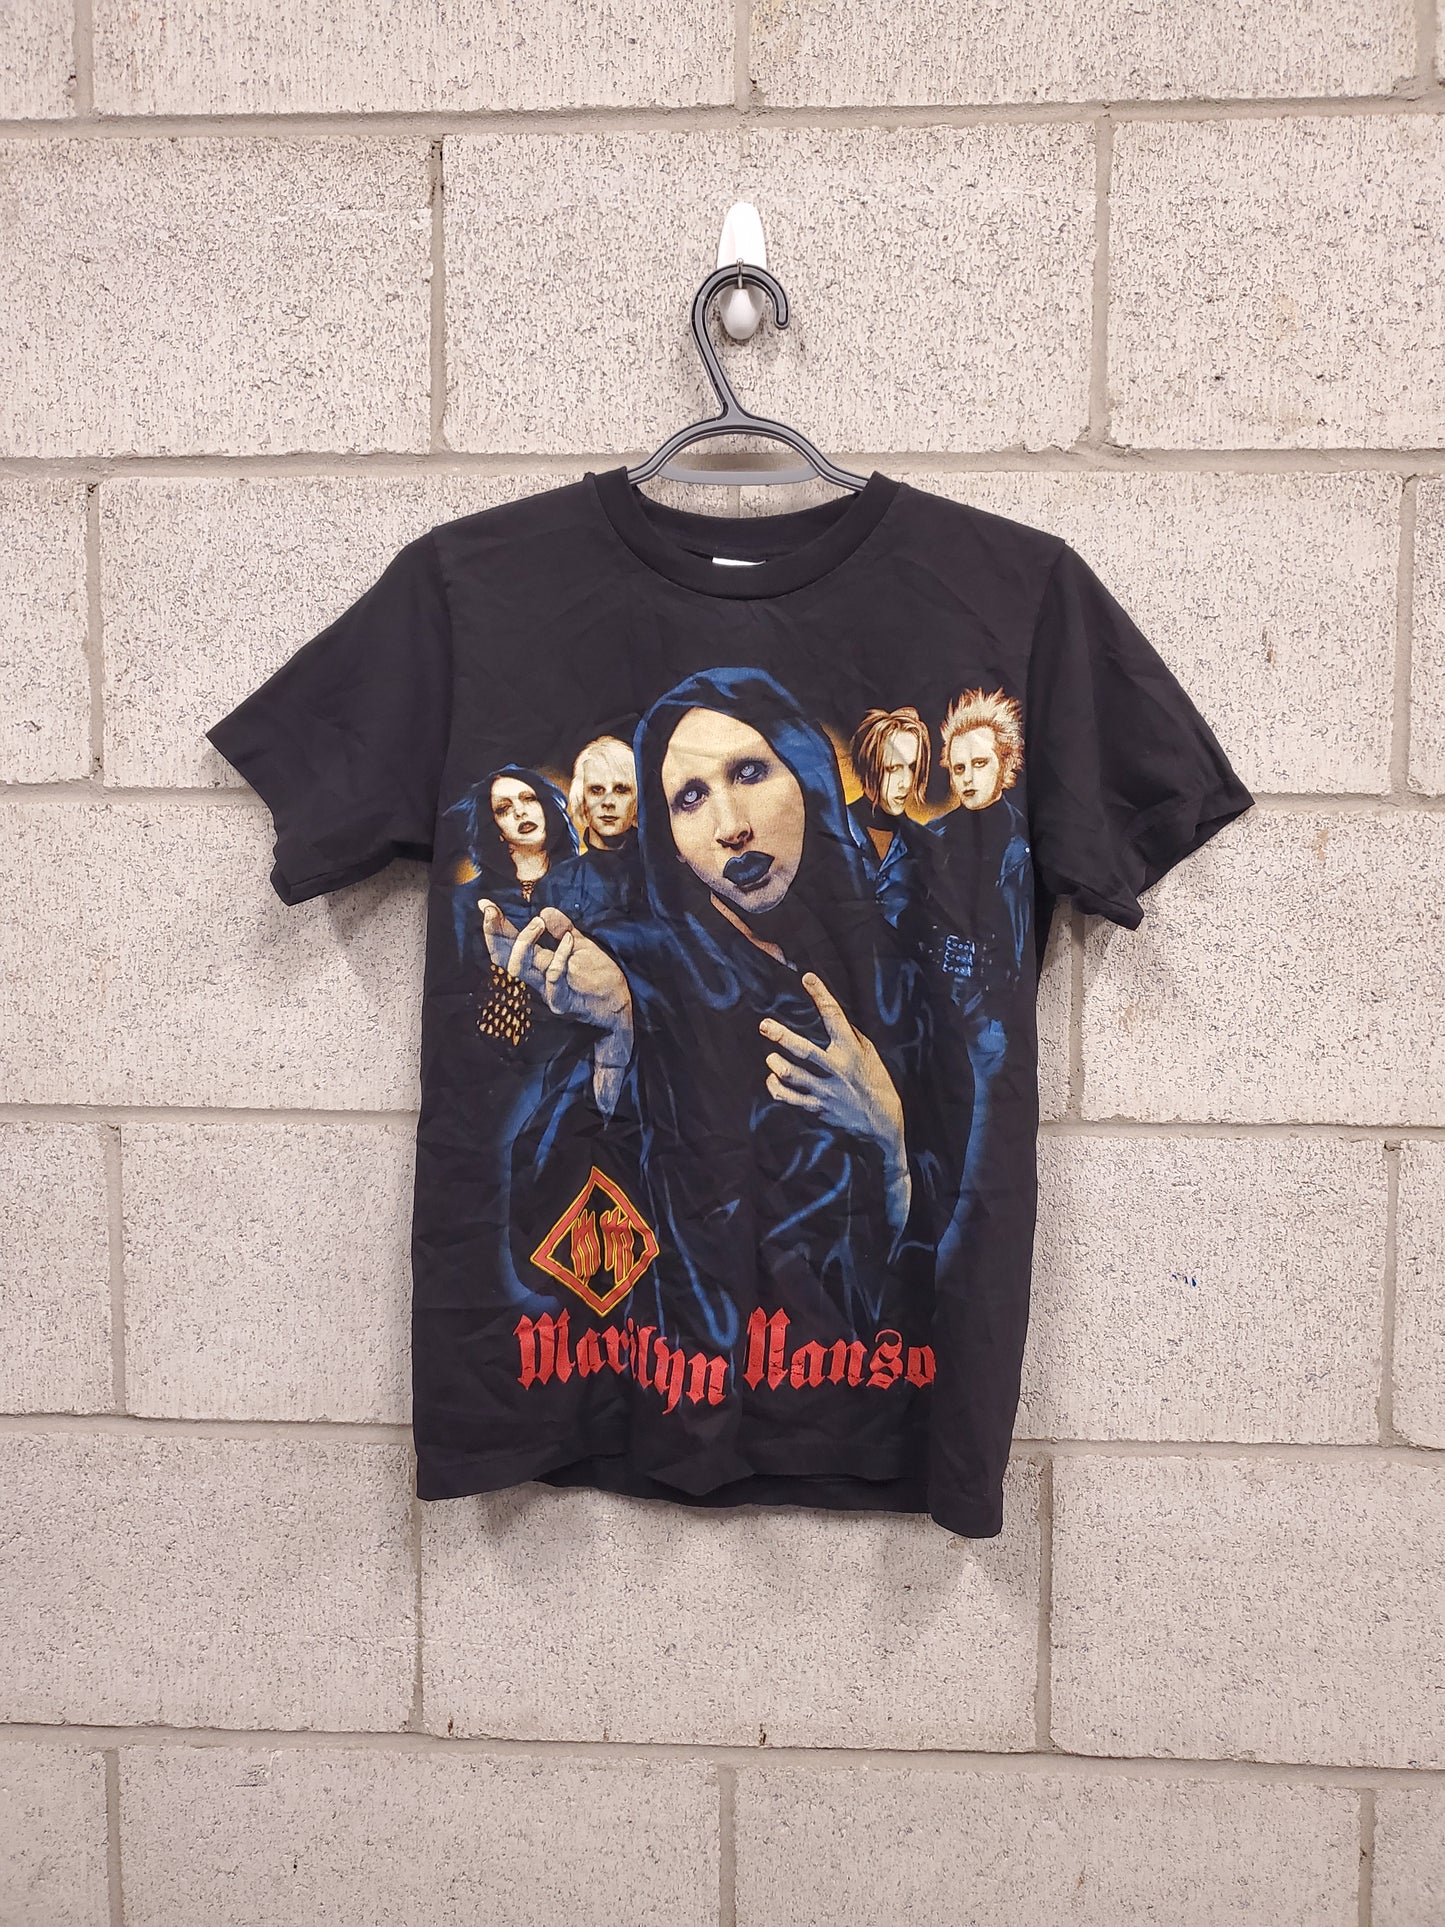 Mens Marilyn Manson T-Shirt Size Small